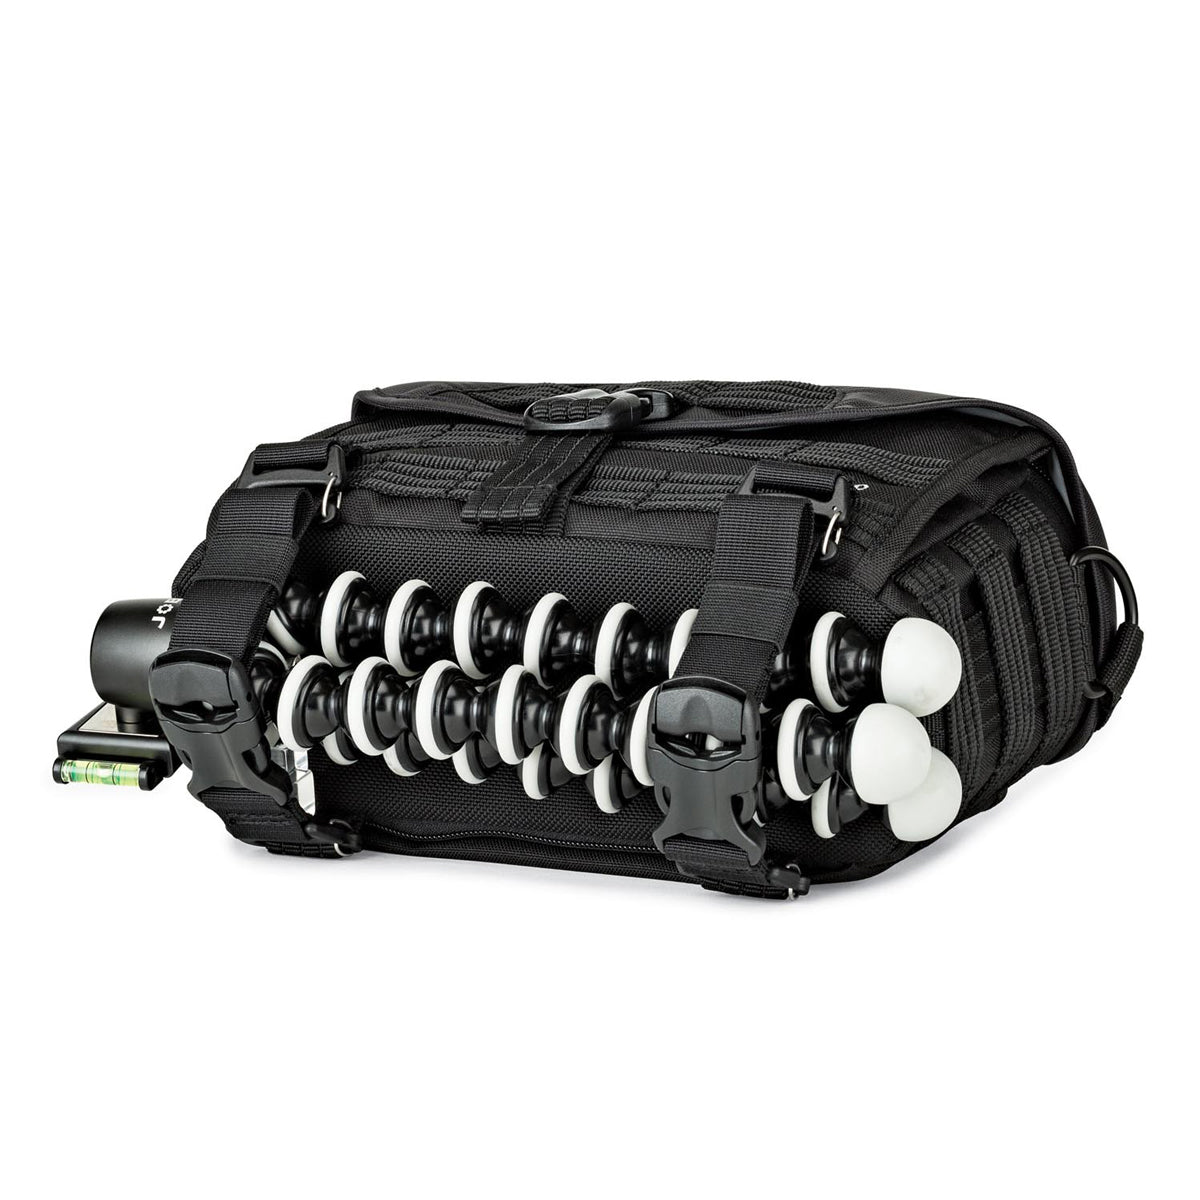 Lowepro ProTactic SH 120 AW Camera Shoulder Bag